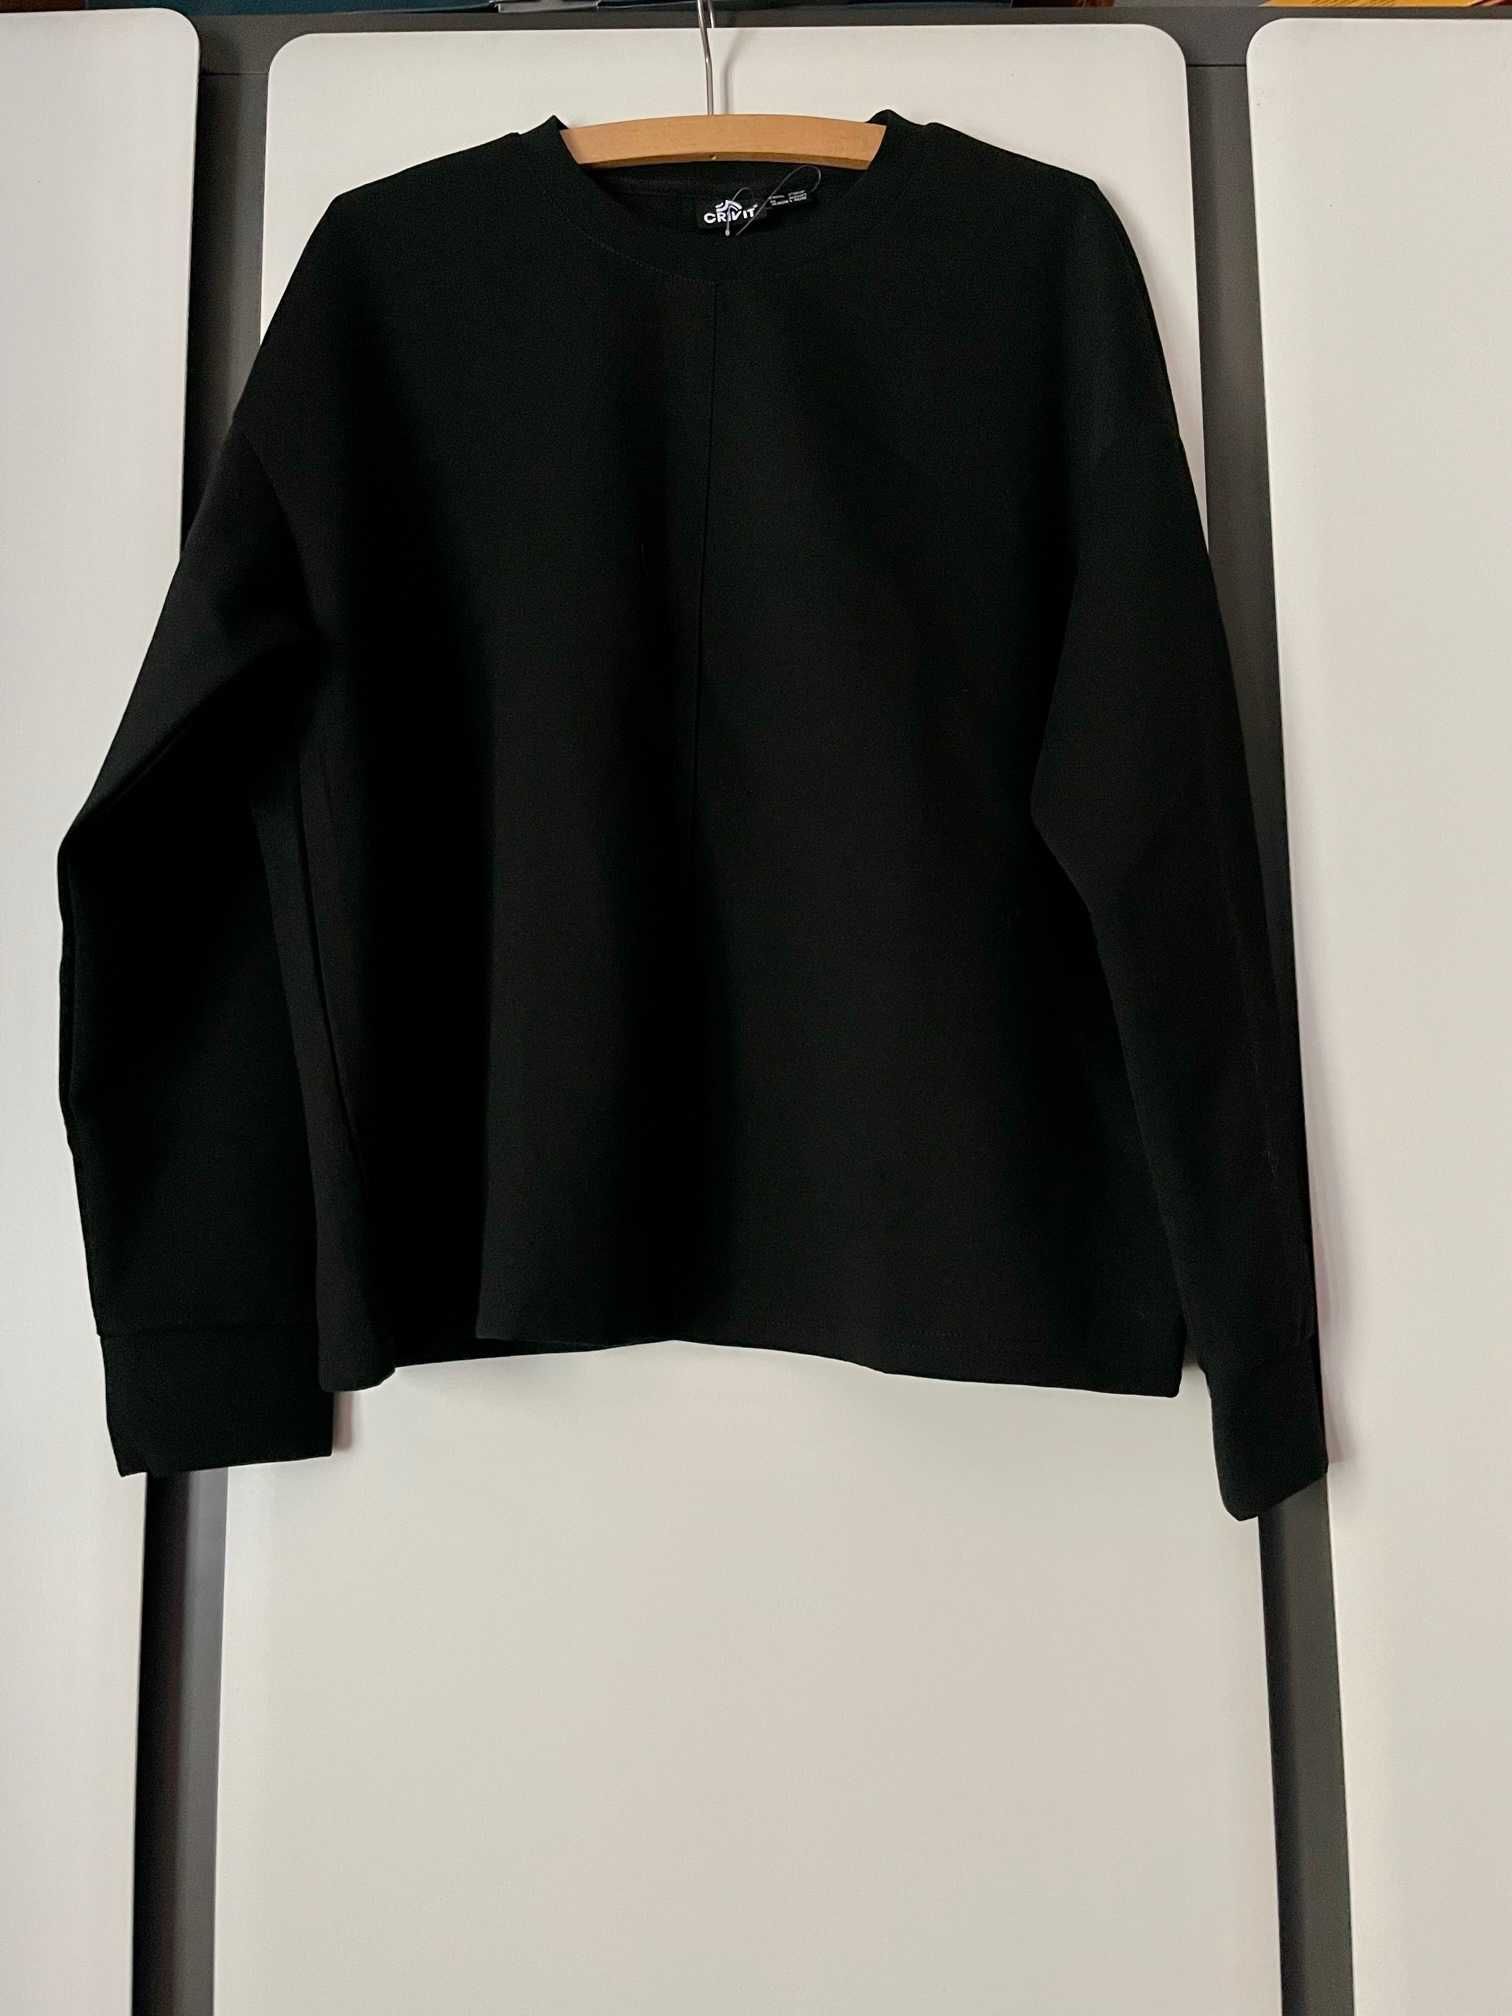 Czarna bluza damska rozmiar 44/46 L/XL